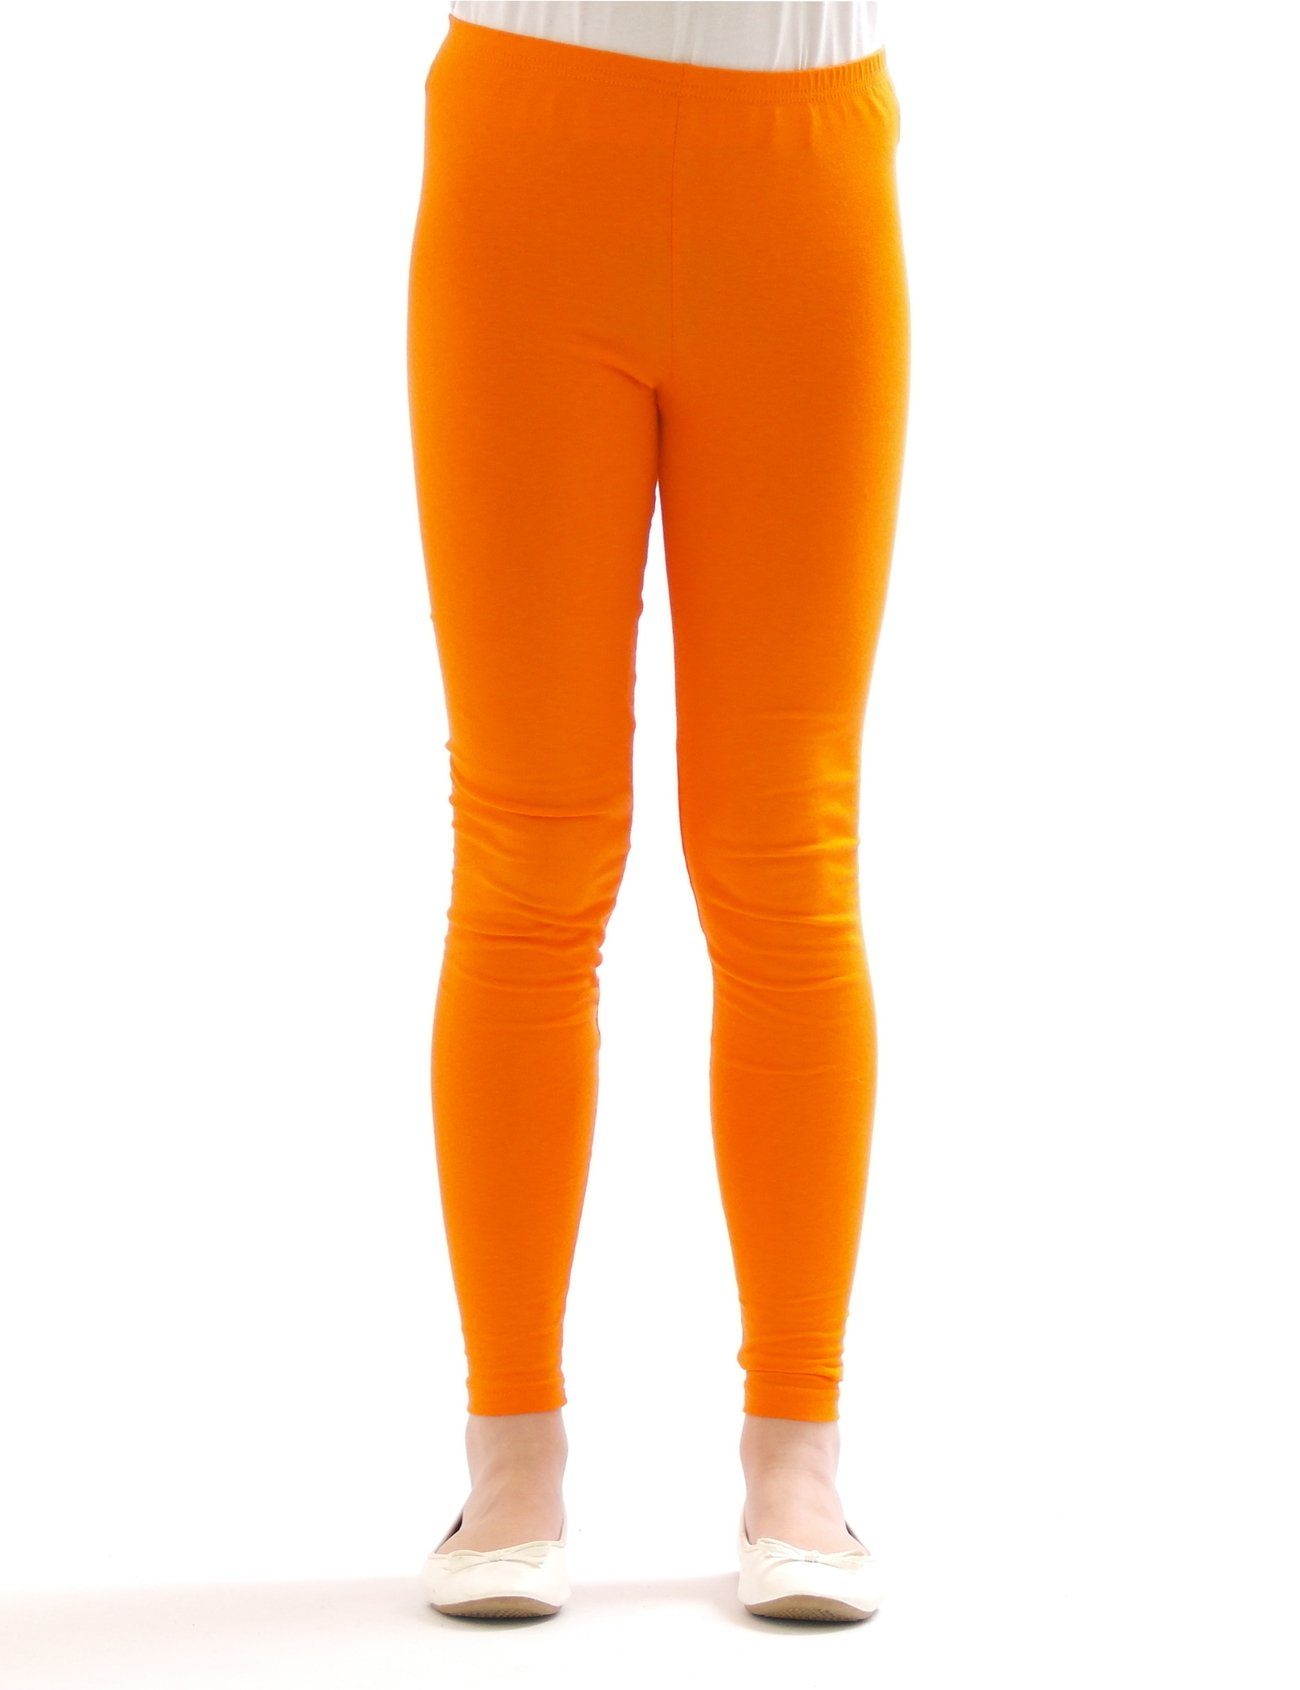 Baumwolle lang Orange SYS aus Mädchen Leggings Hose Leggings blickdicht Kinder